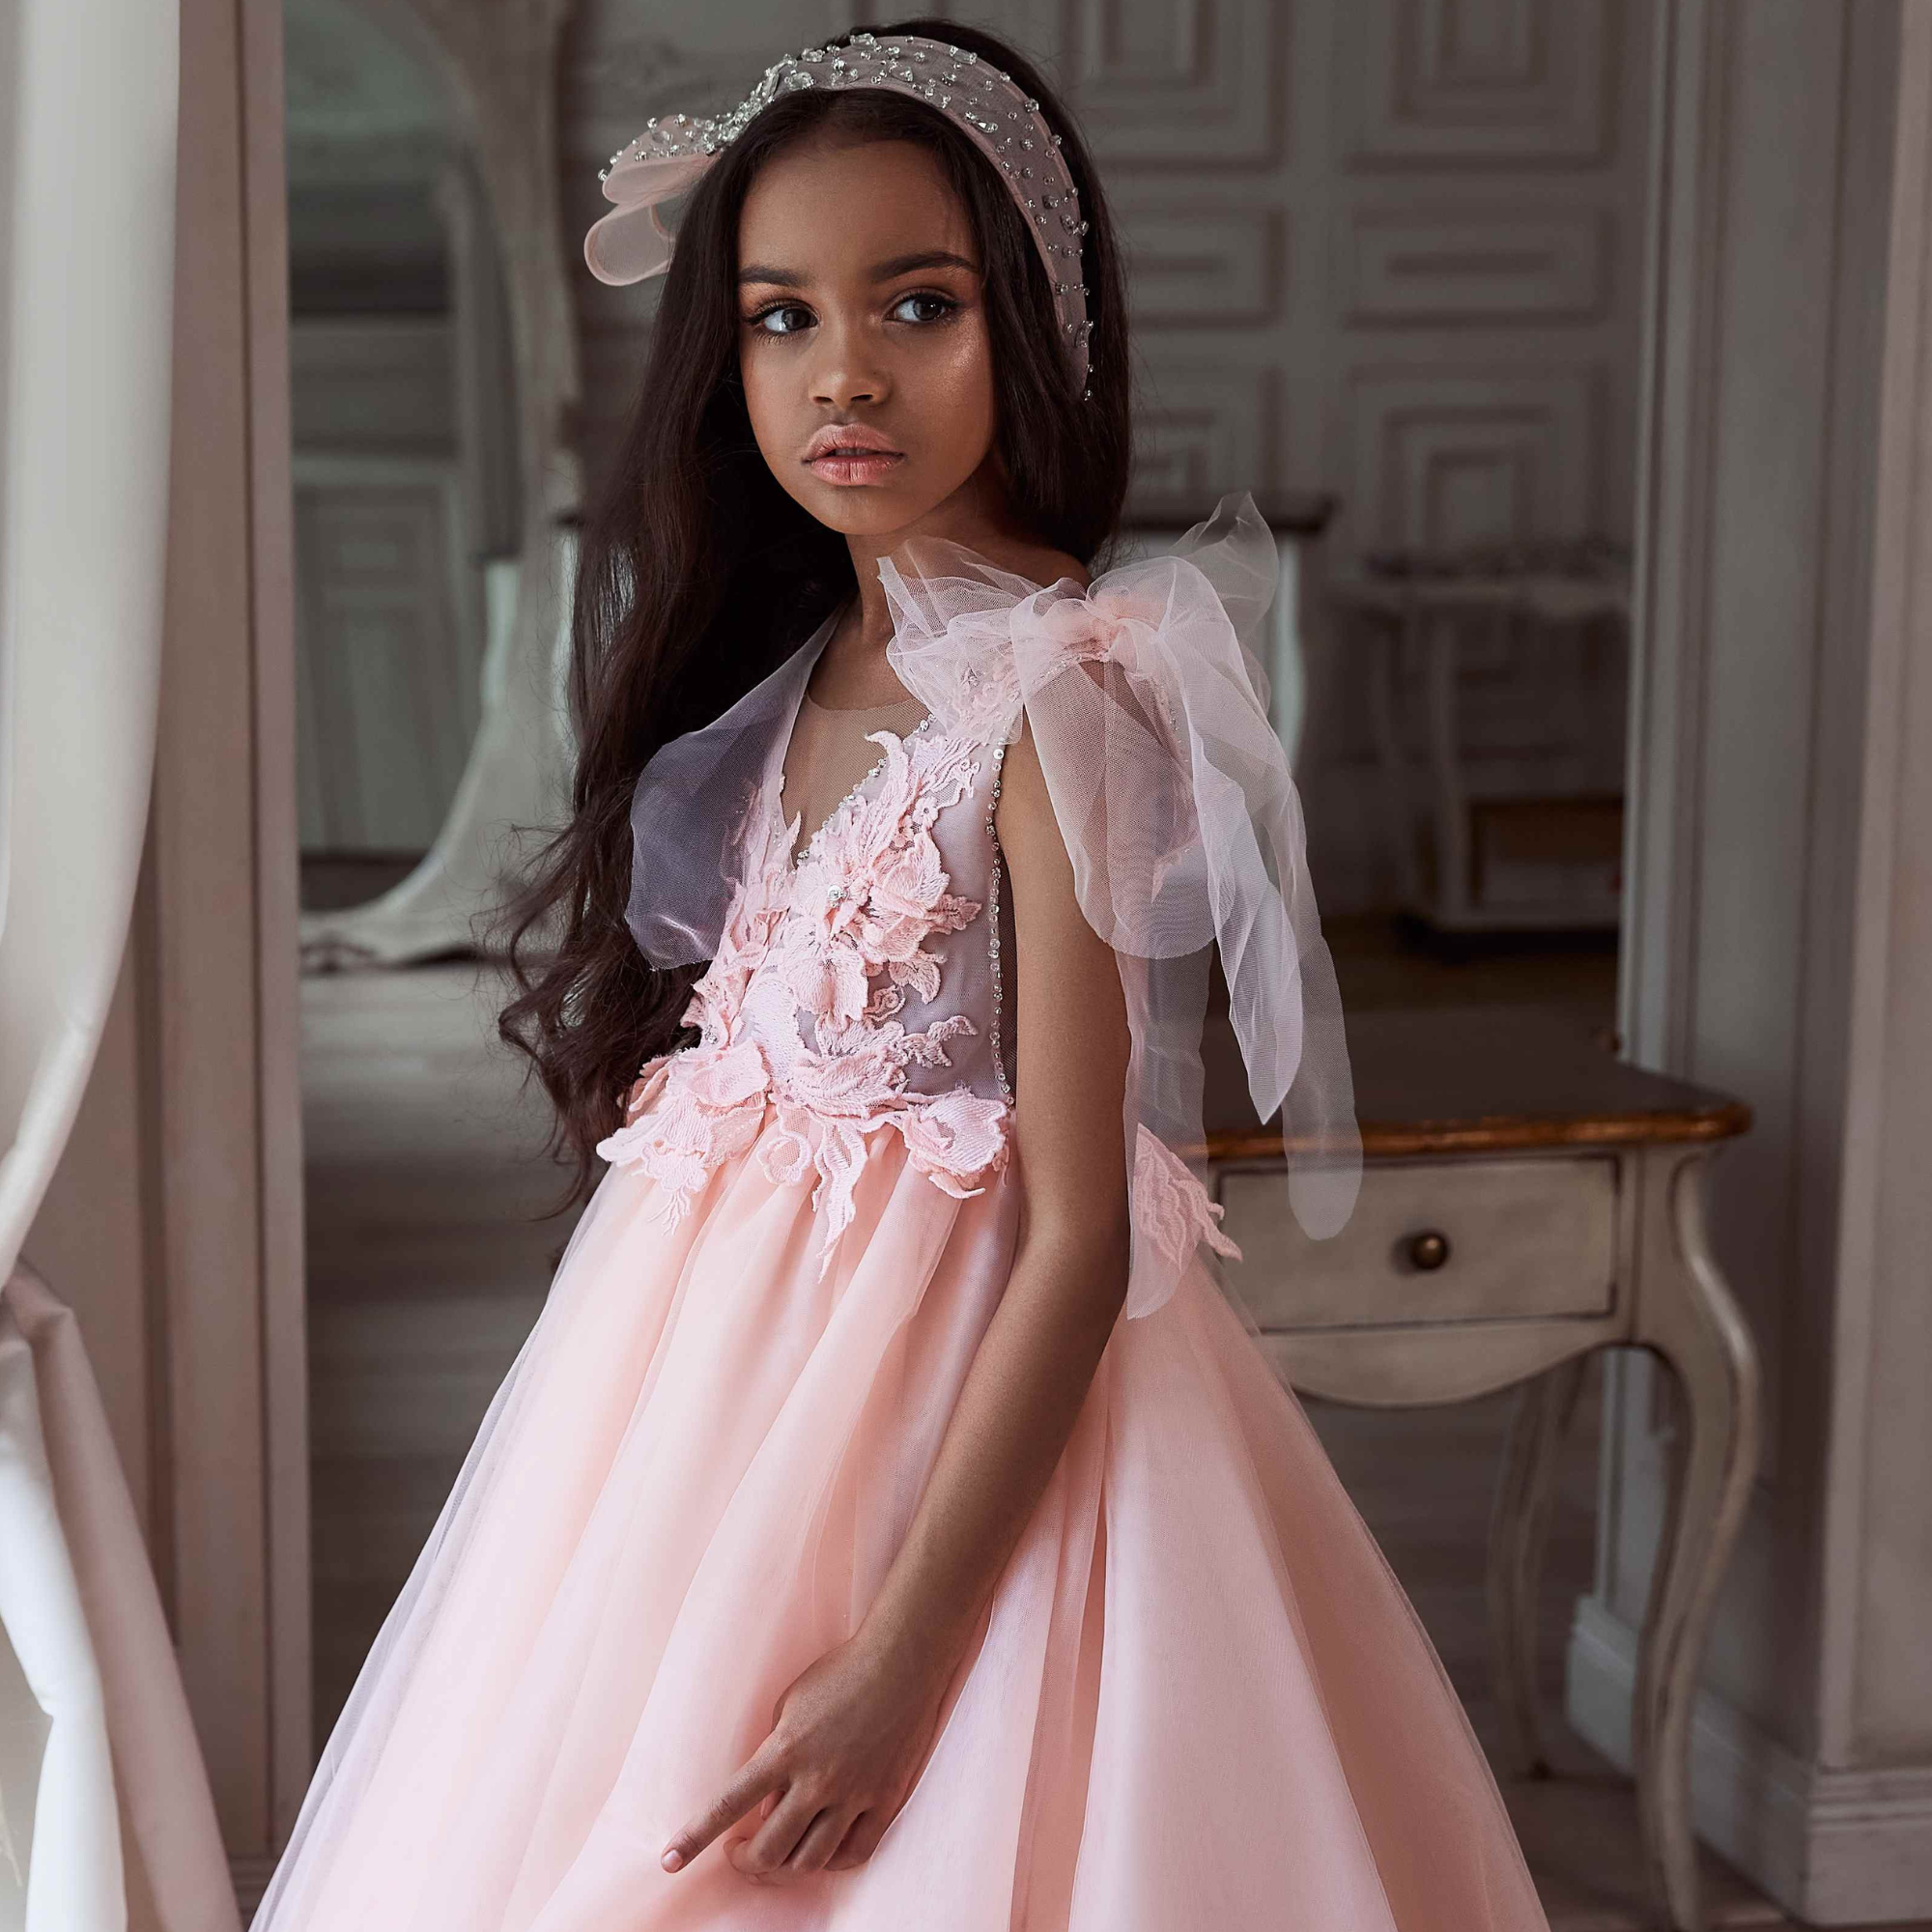 Black Formal Dresses For Teens | Princess Girl Dress | Dideyttawl